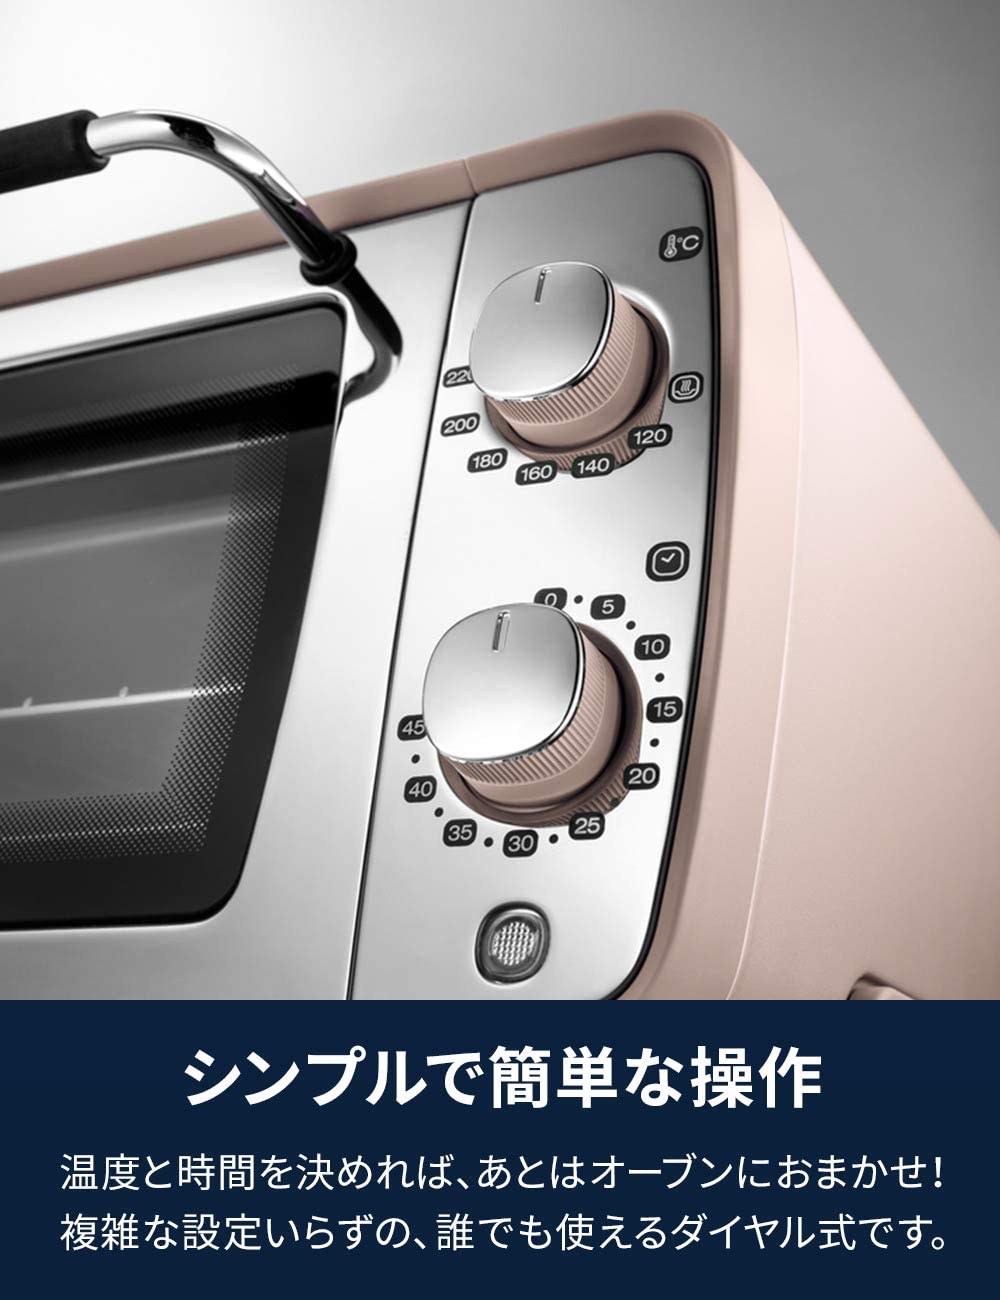 【DeLonghi】オーブン&トースター GR